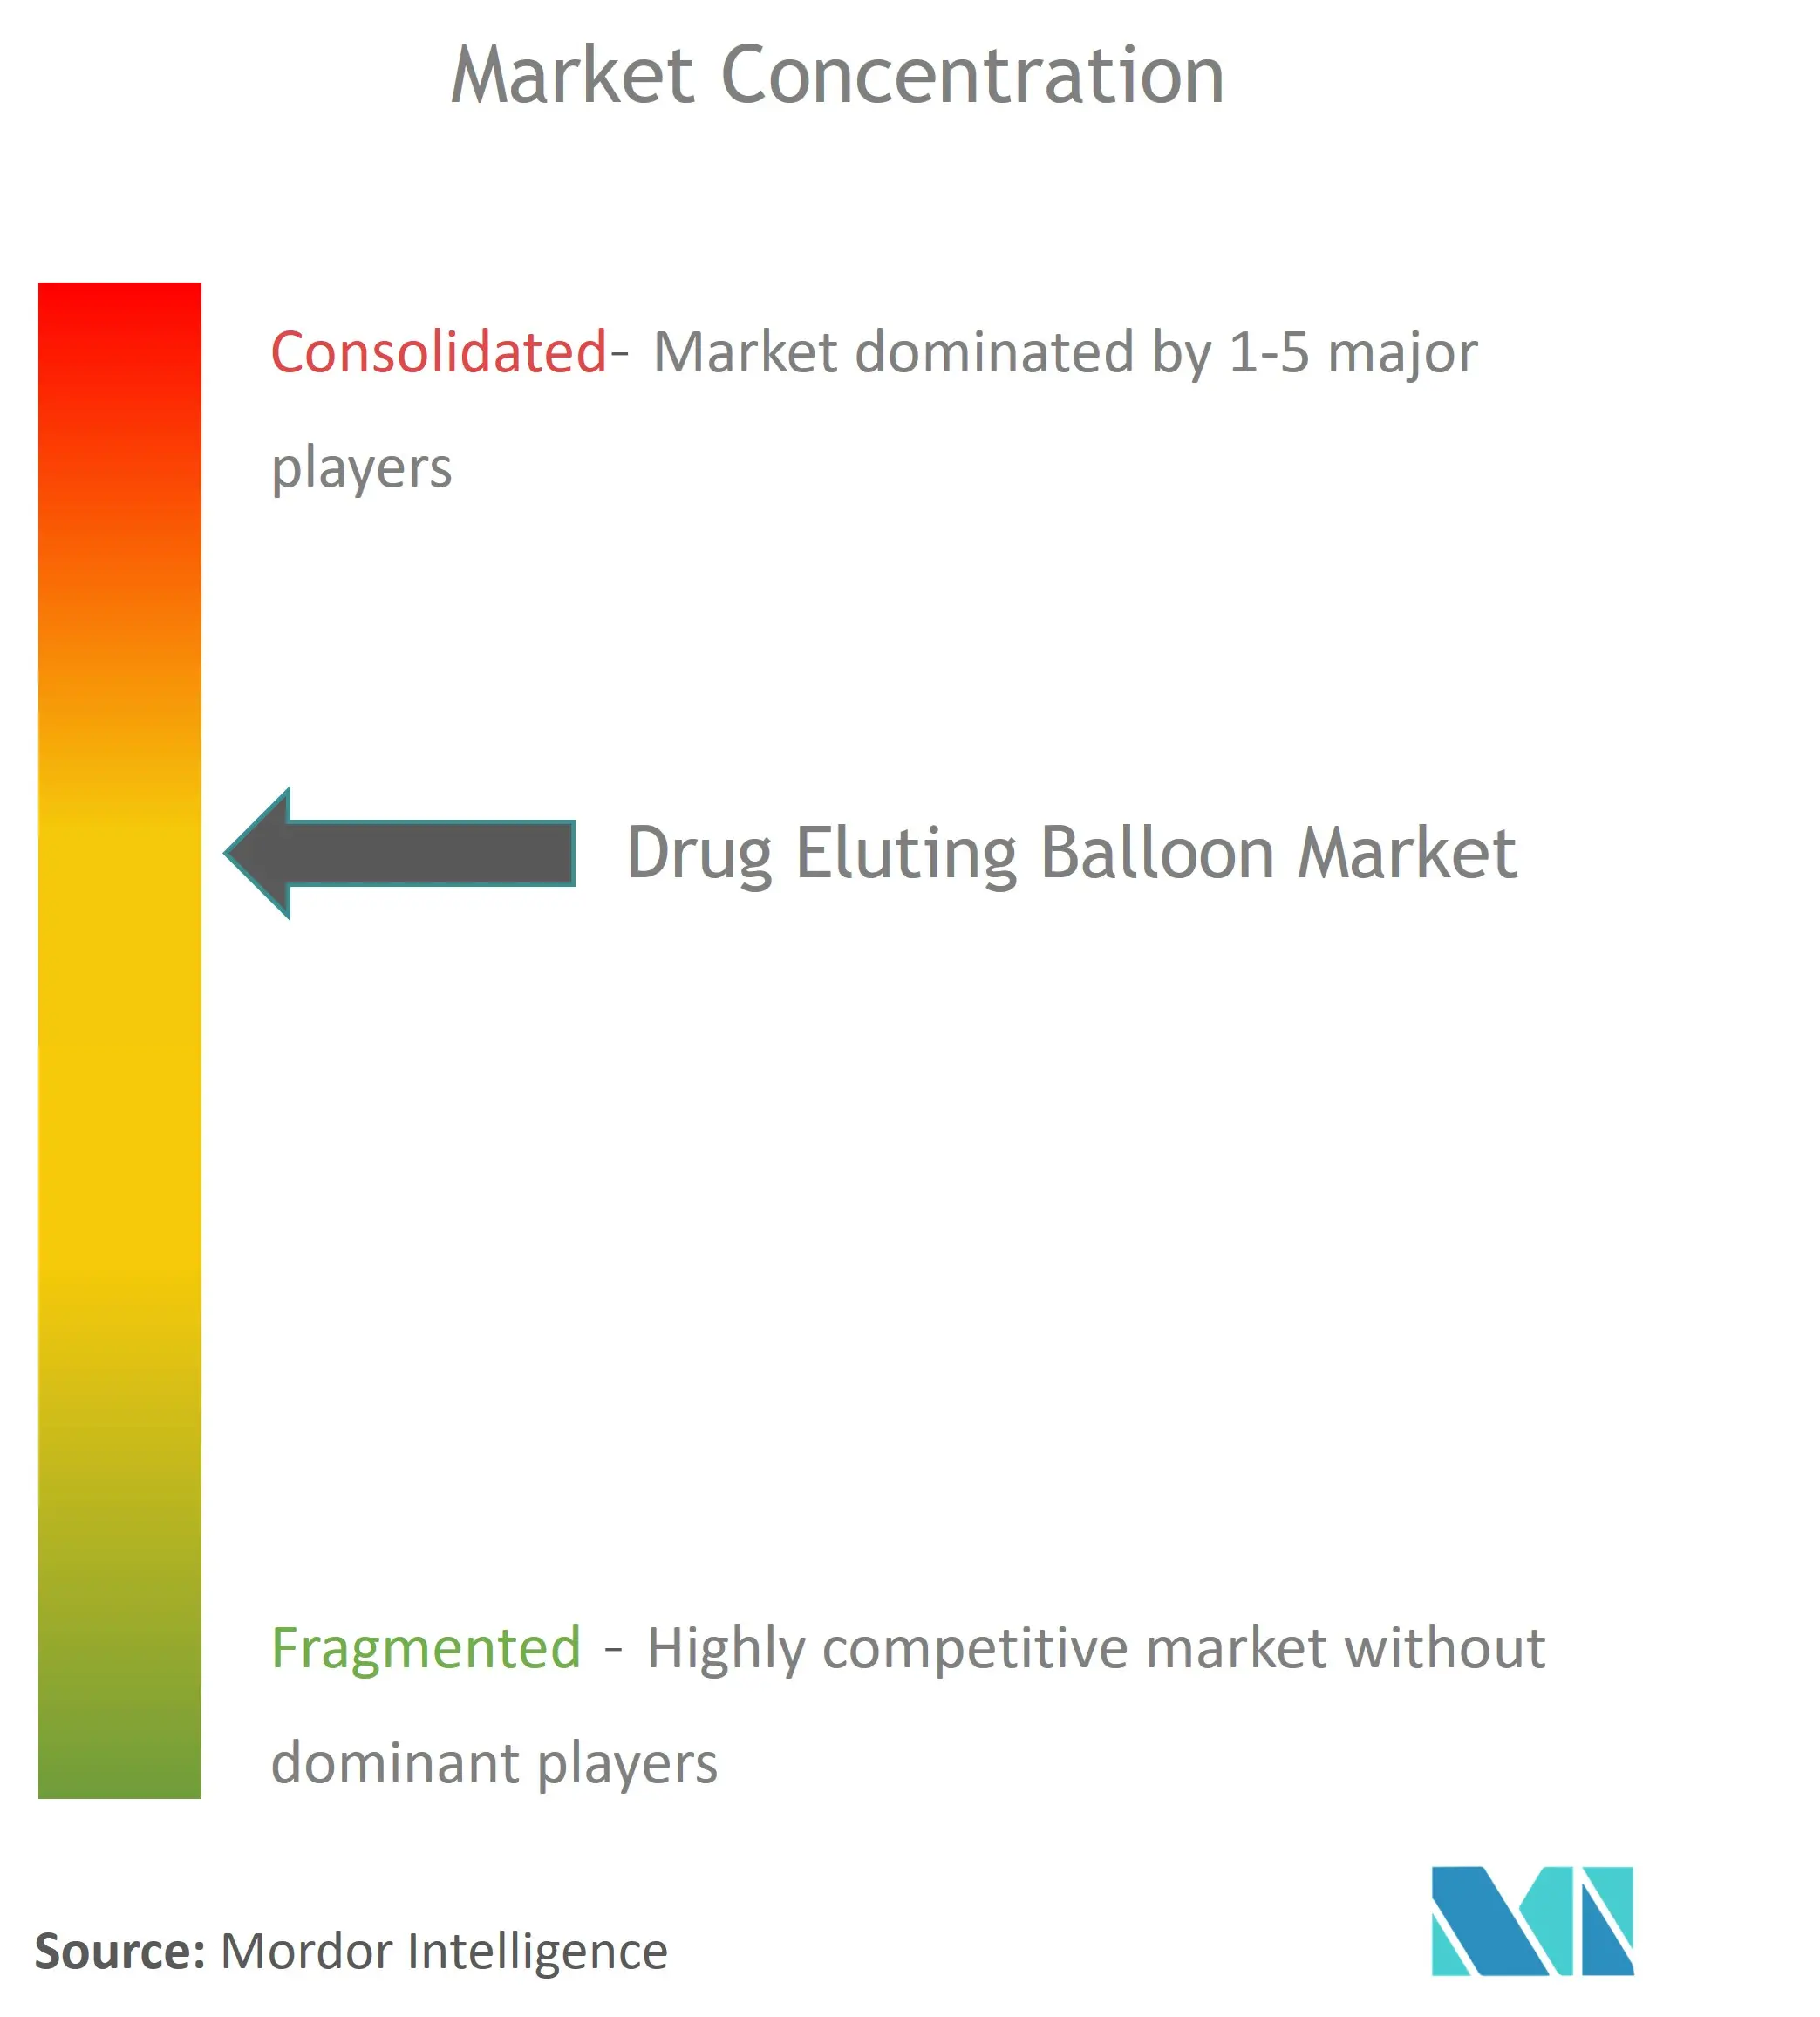 Drug Eluting Balloon Market Concentration